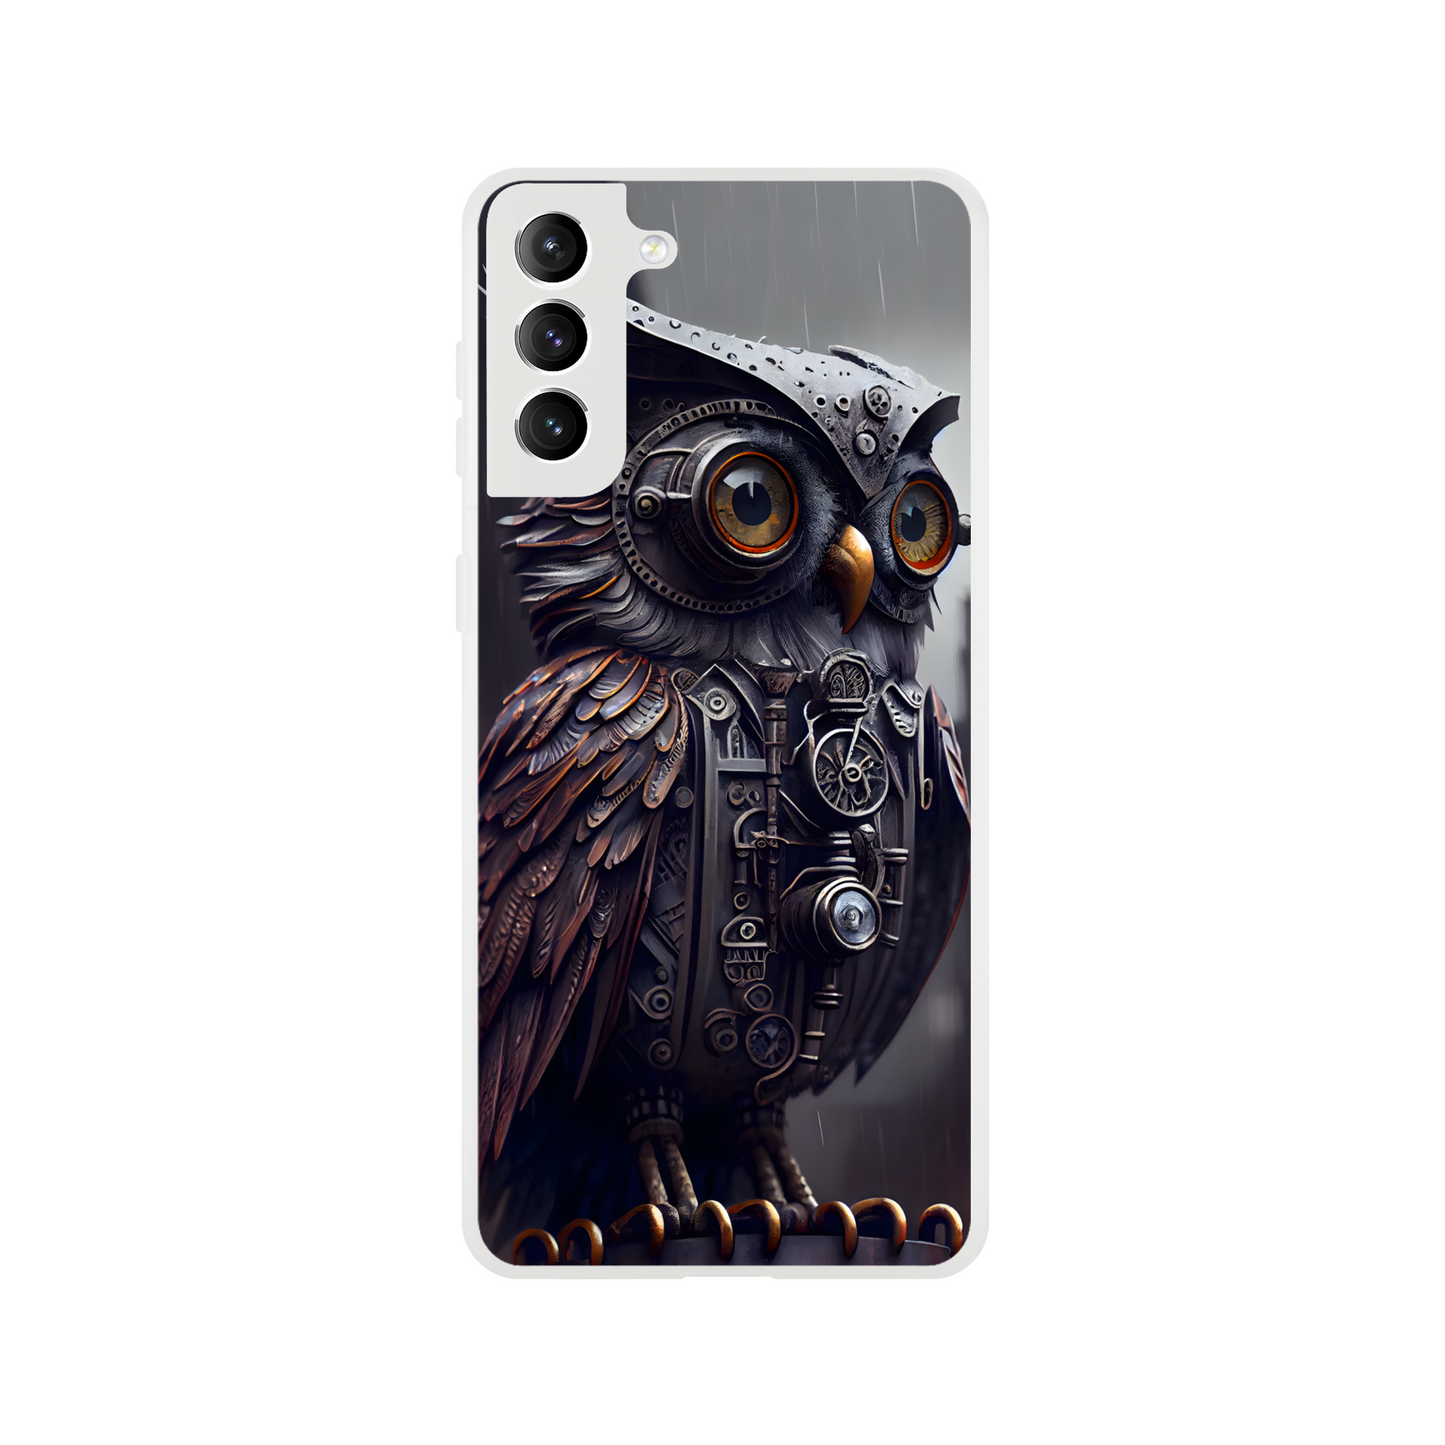 Steampunk owl - Flexi case